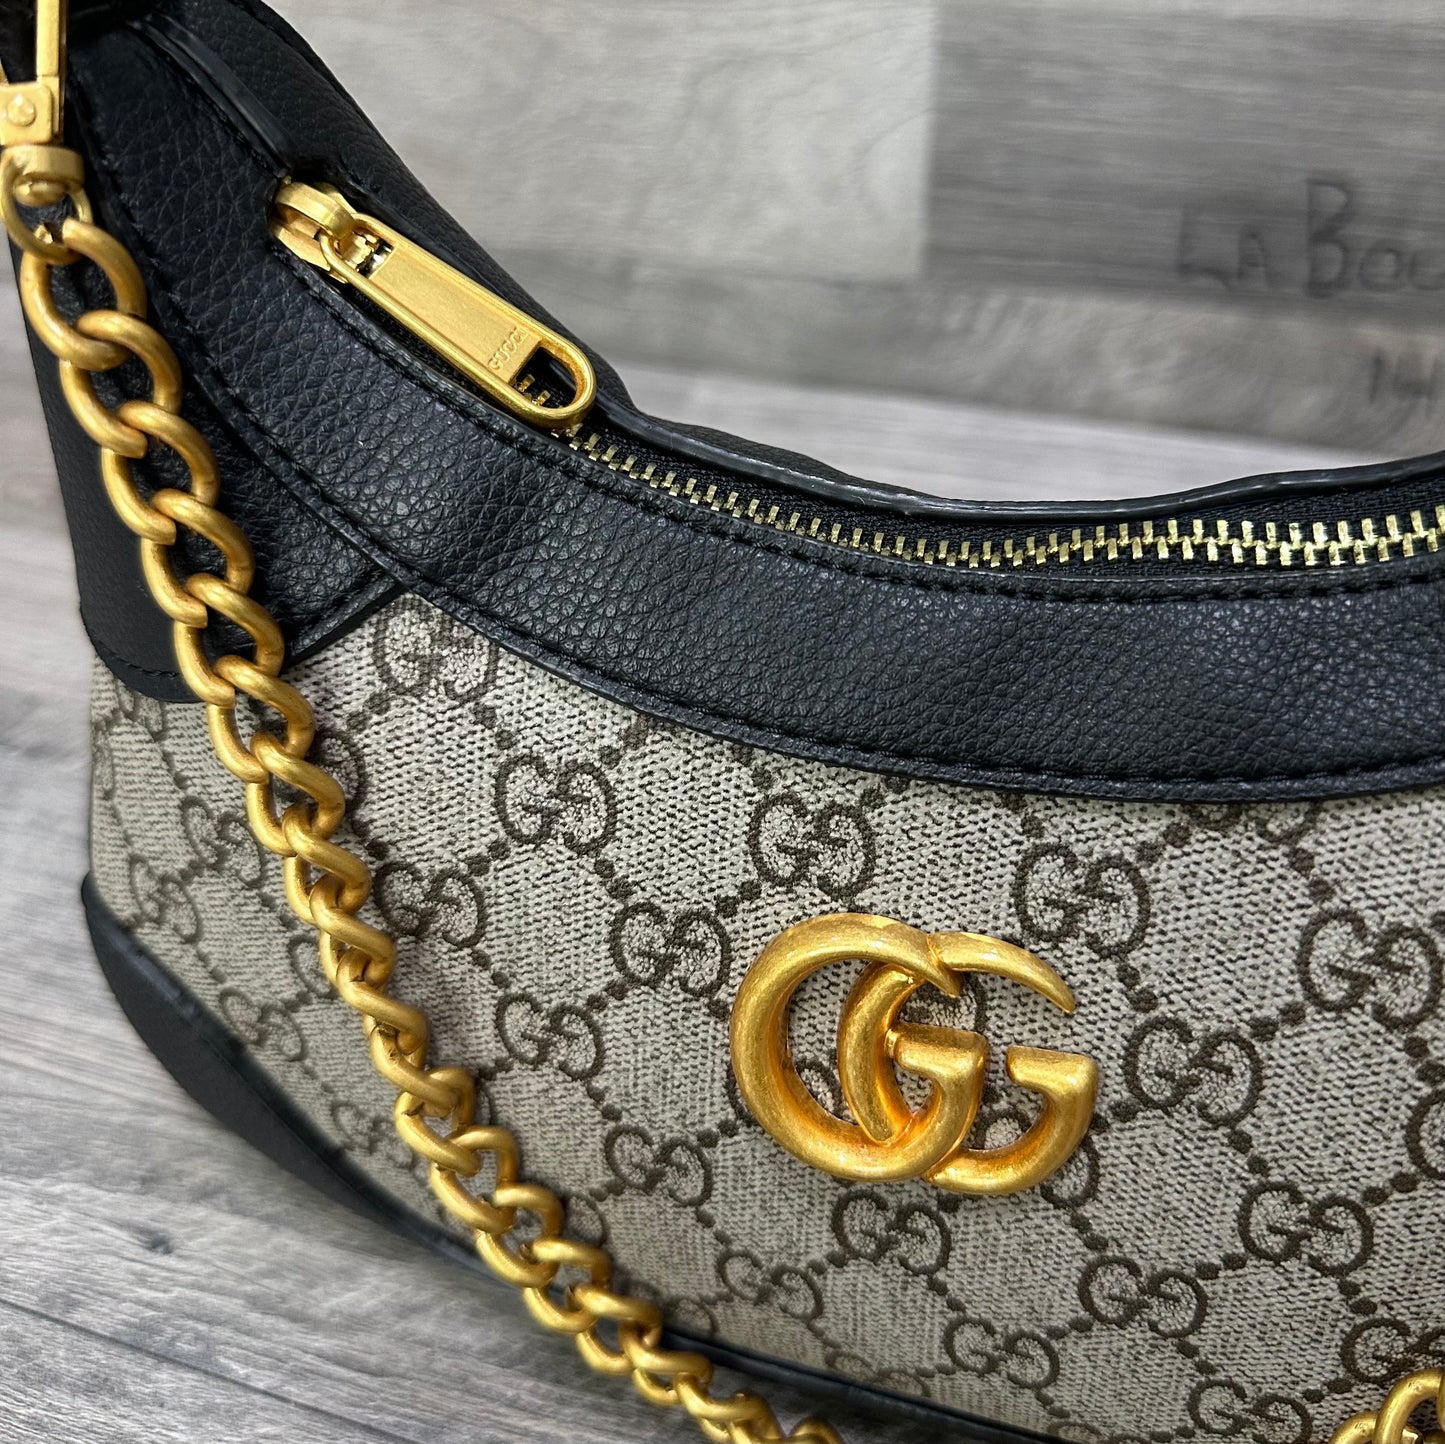 Gucci Aphrodite Classic Black bags